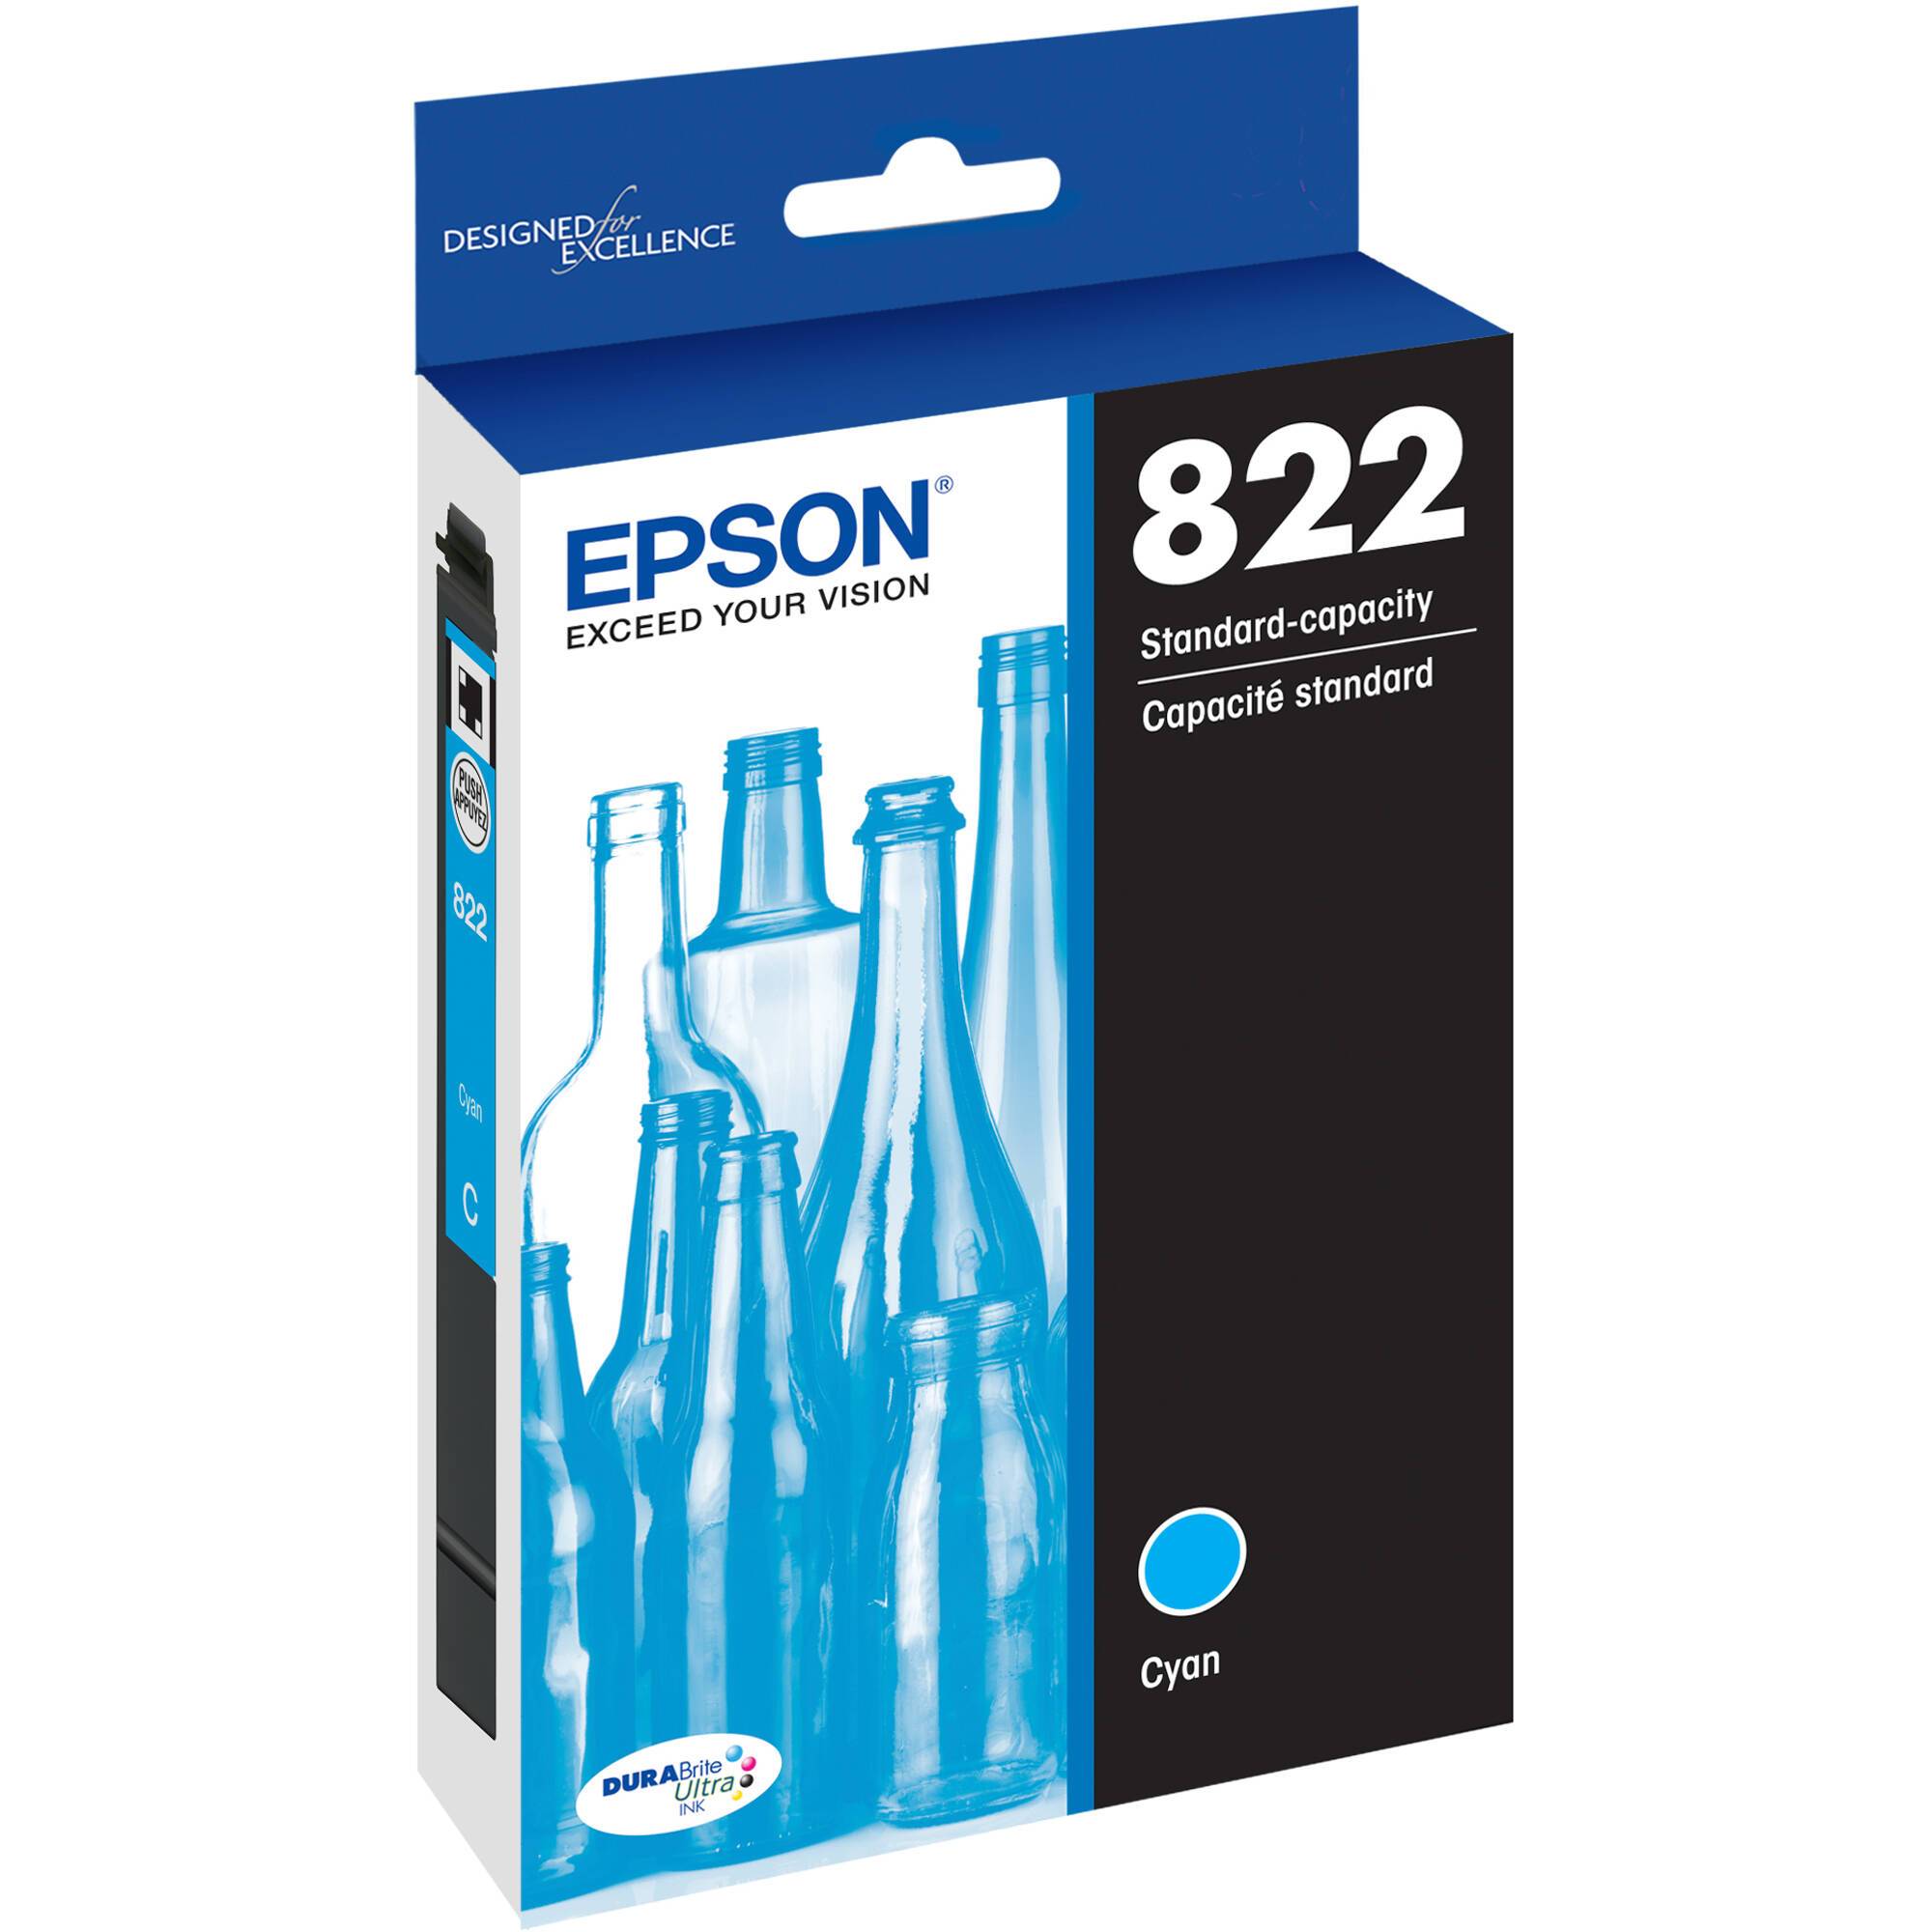 Absolute Toner T822220-S Epson EPSON T822 Standard Capacity Cyan Ink Cartridge Original Epson Cartridge